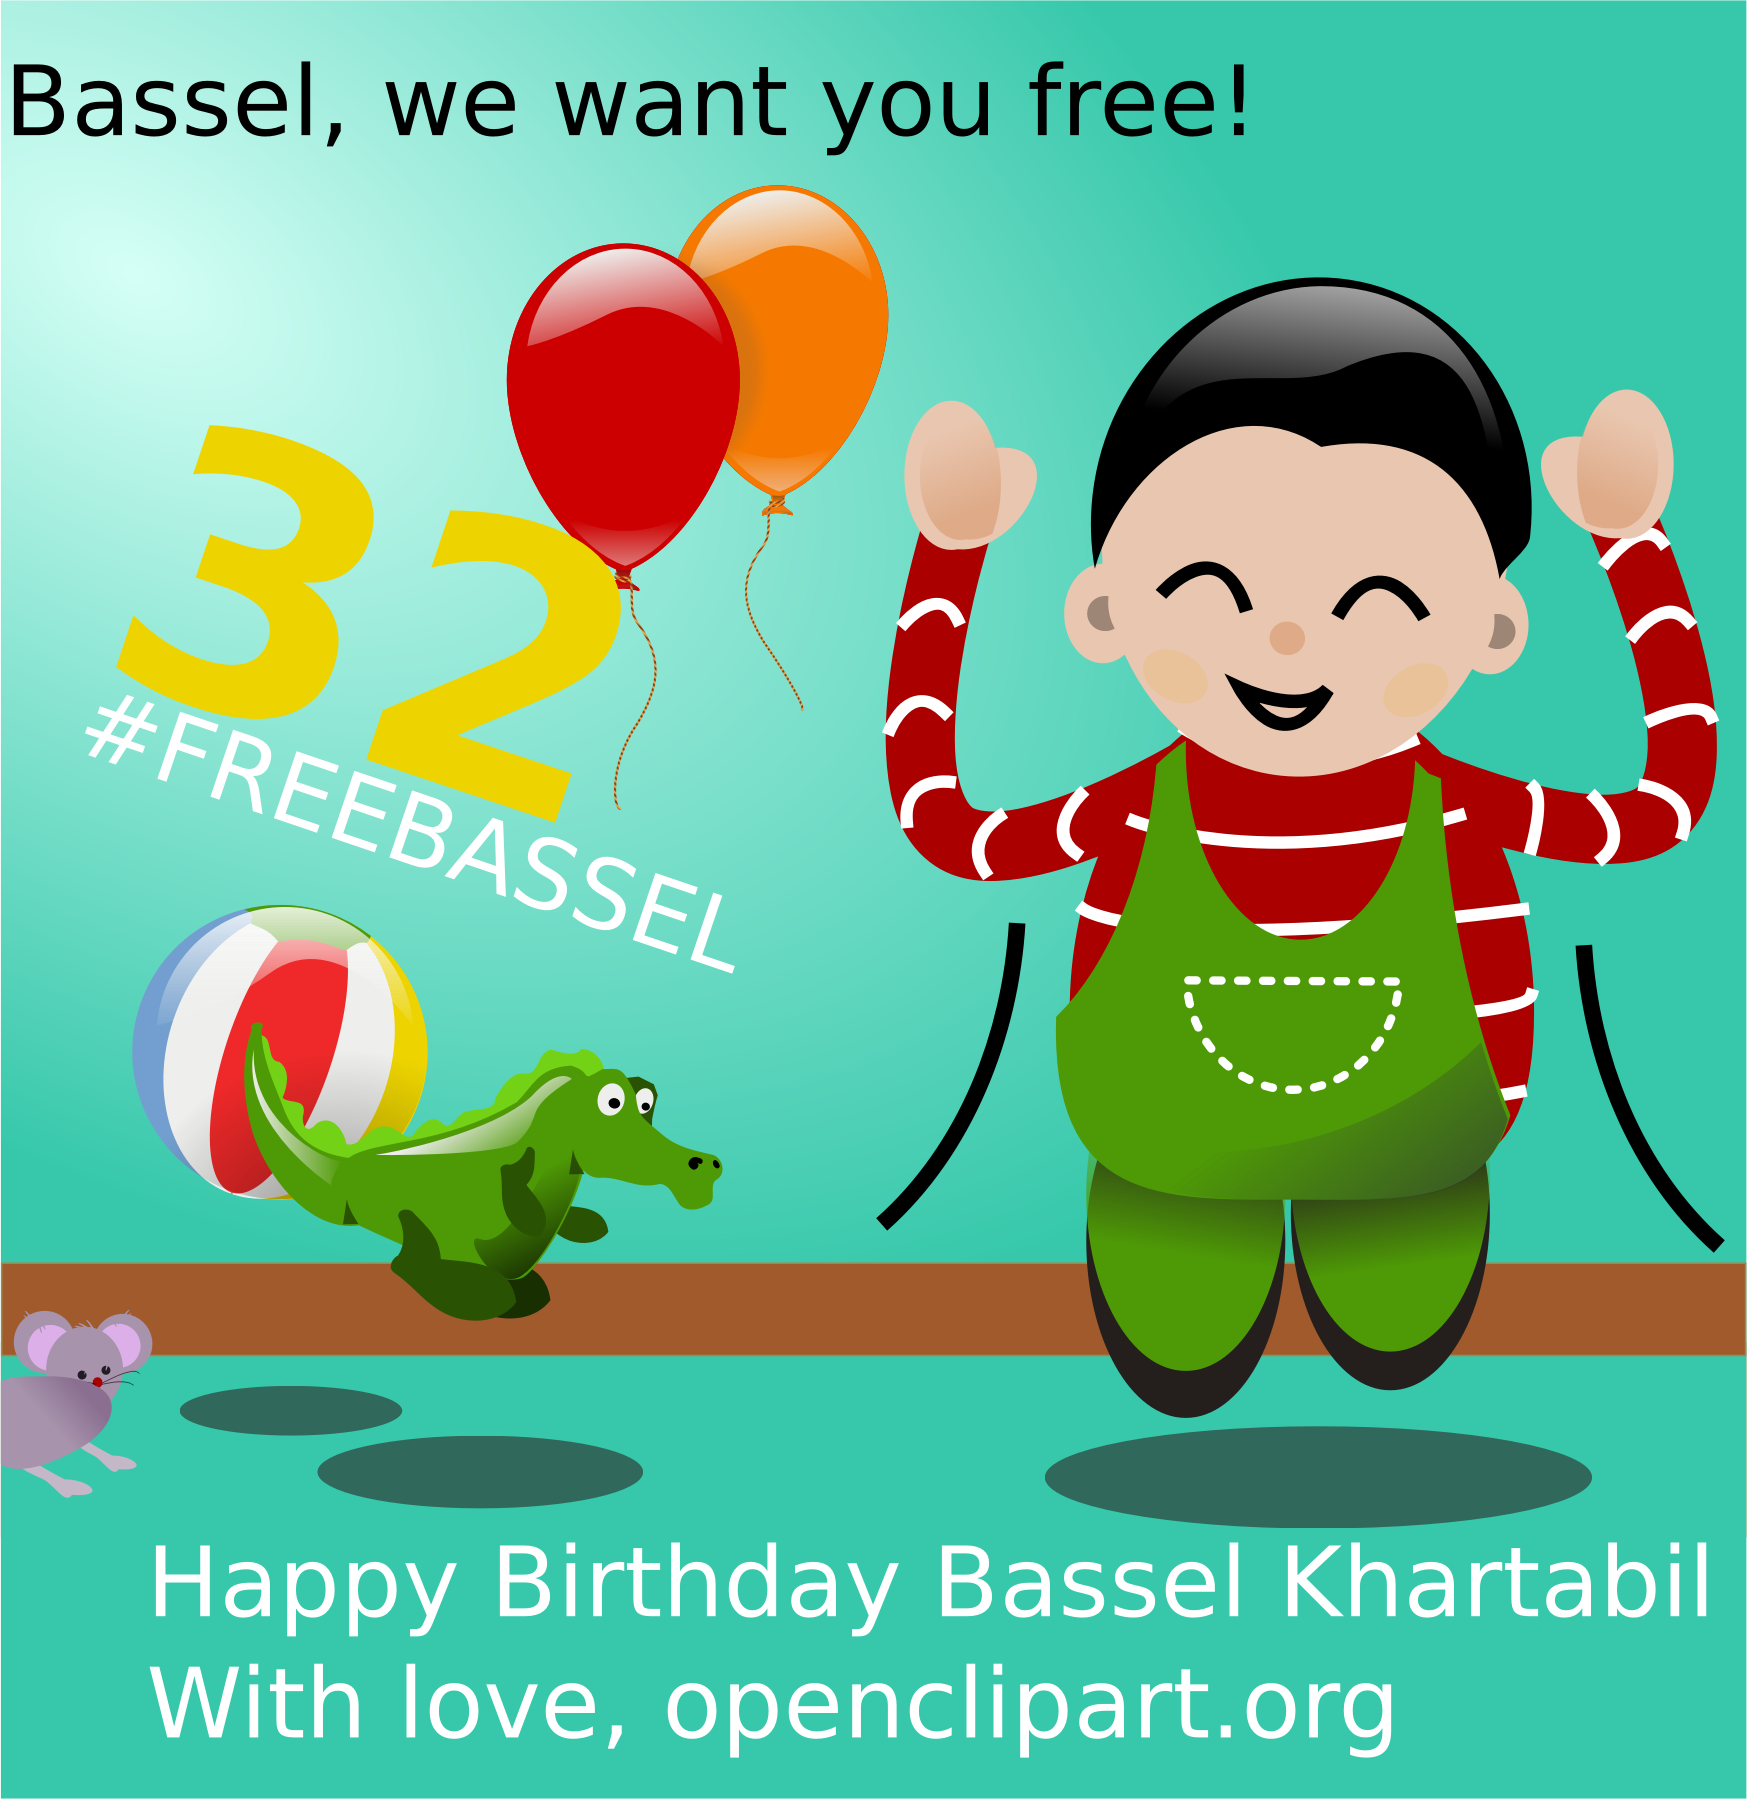 Freebassel Birthday Celebration SVG Clip arts